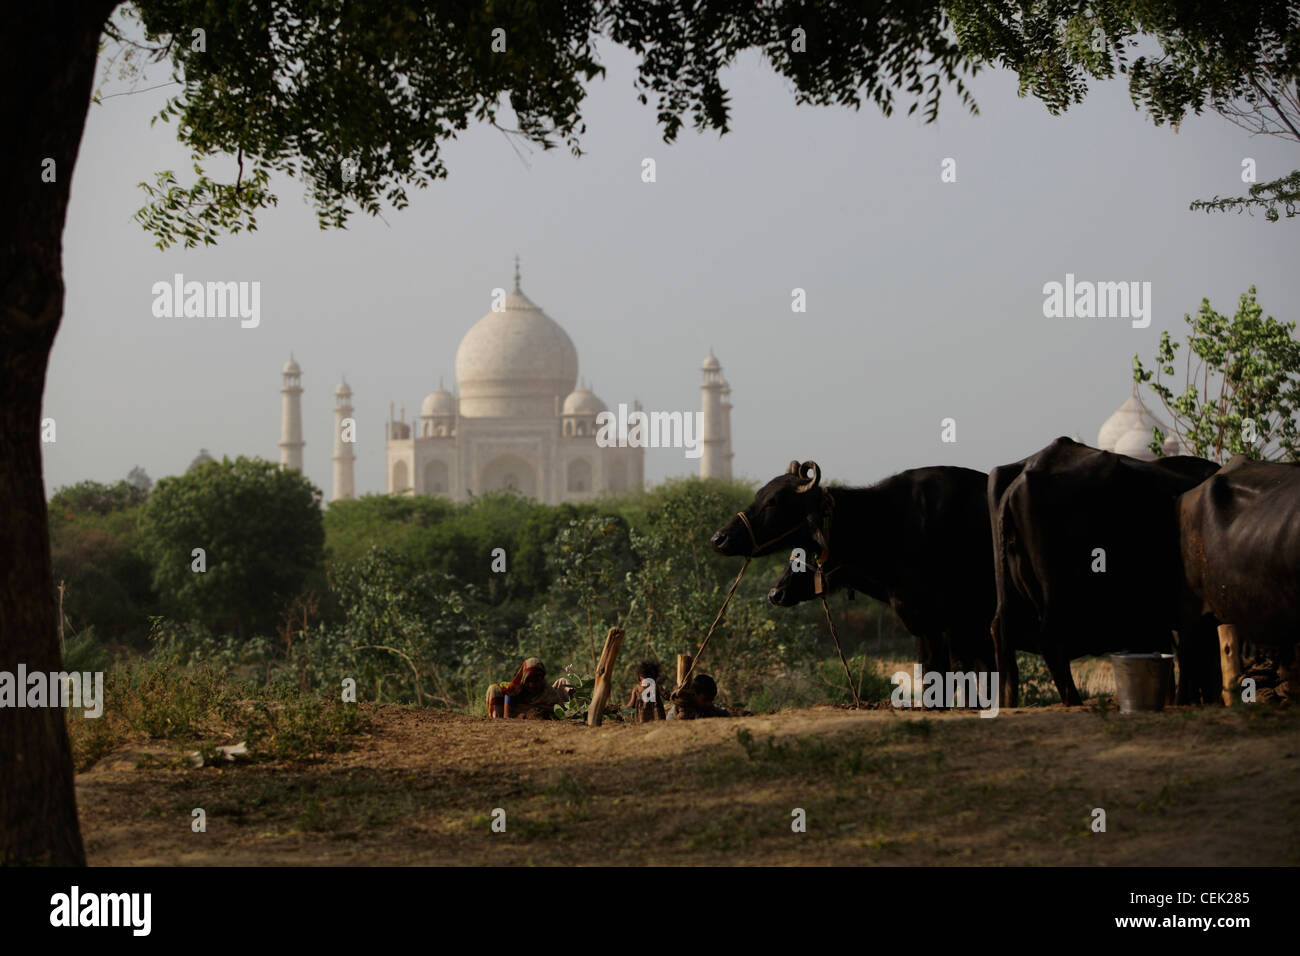 Indian family making mud bricks near cows, Taj Mahal in the background. Agra, India Stock Photo